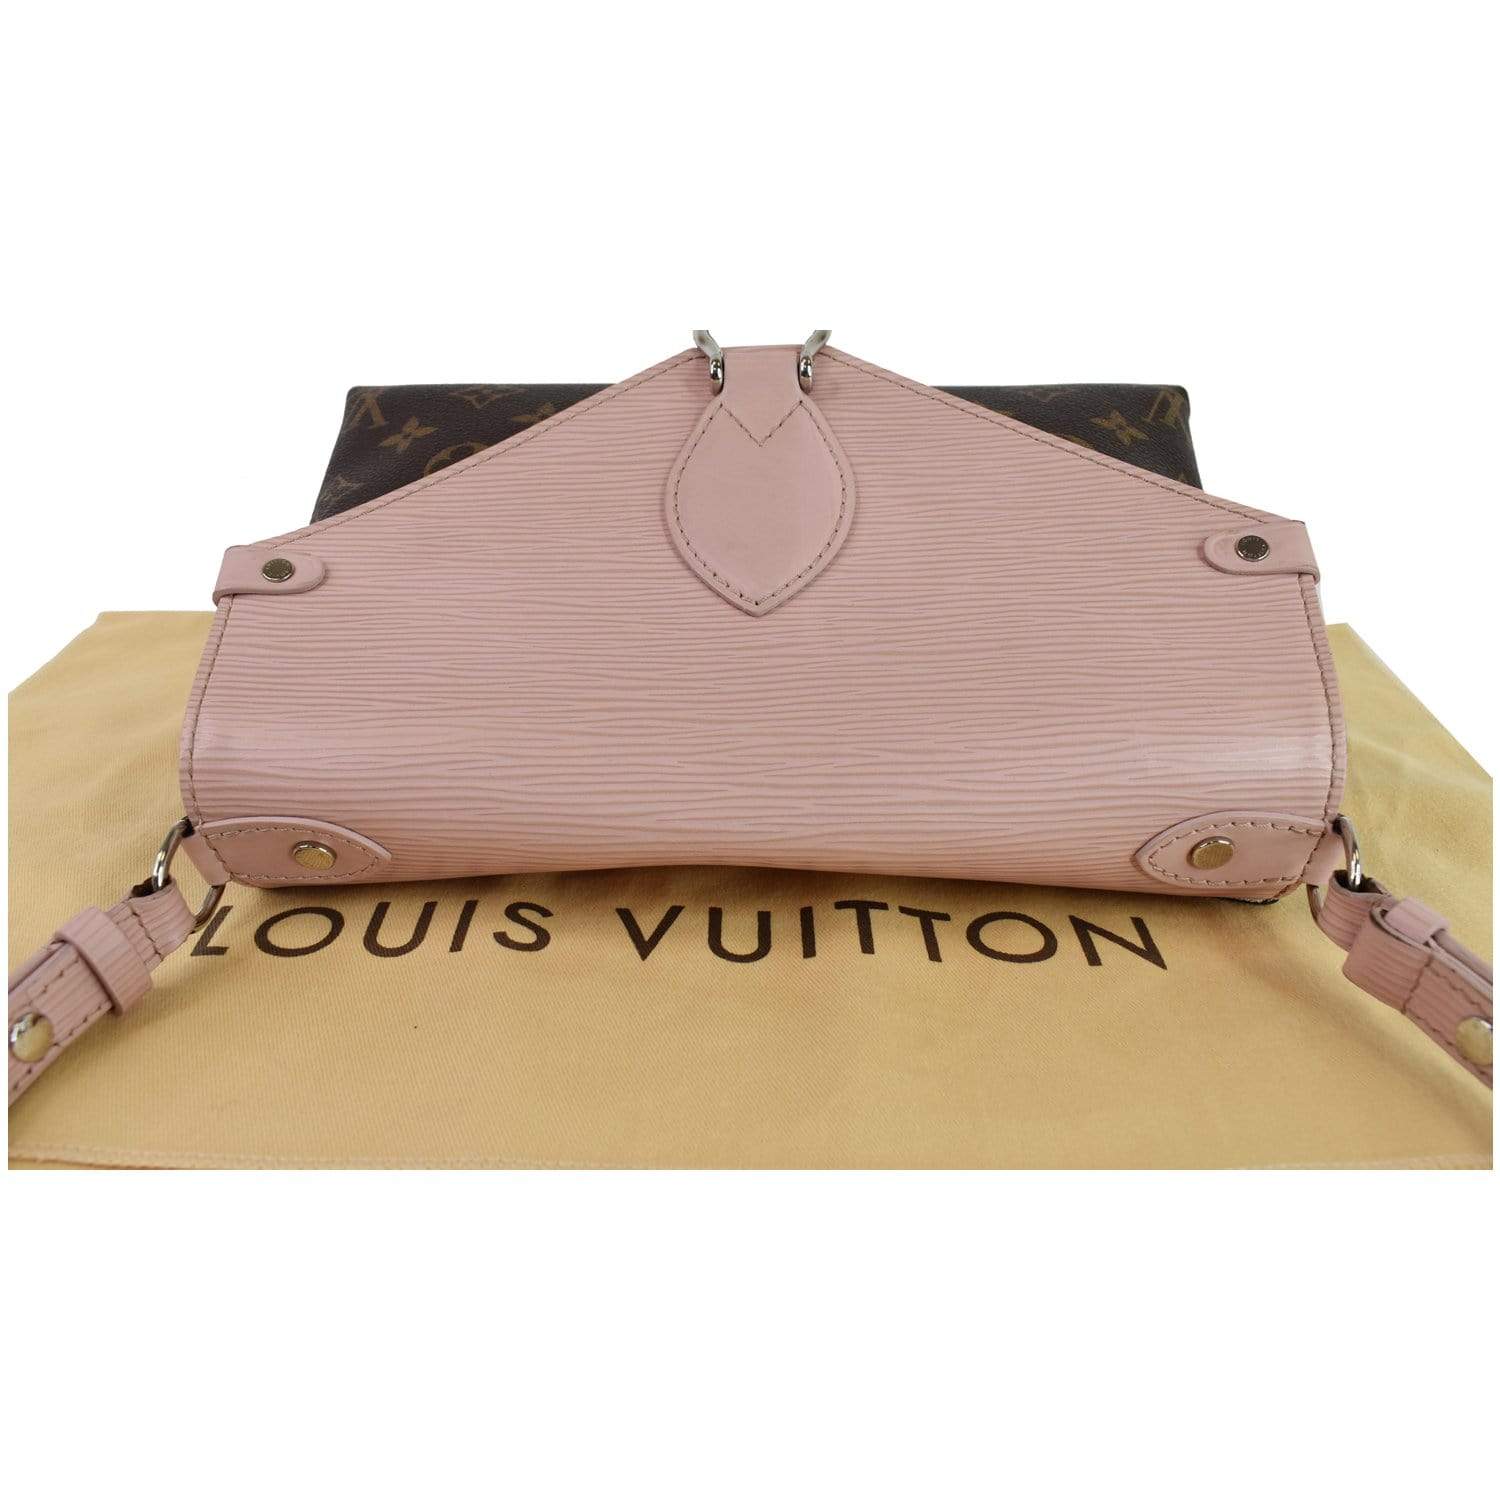 Authenticated used Louis Vuitton Handbag Saint Michel Pink Brown Rose Ballerina Monogram EPI M44033 Leather CA3197 Louis Vuitton LV Bag Flap 2Way